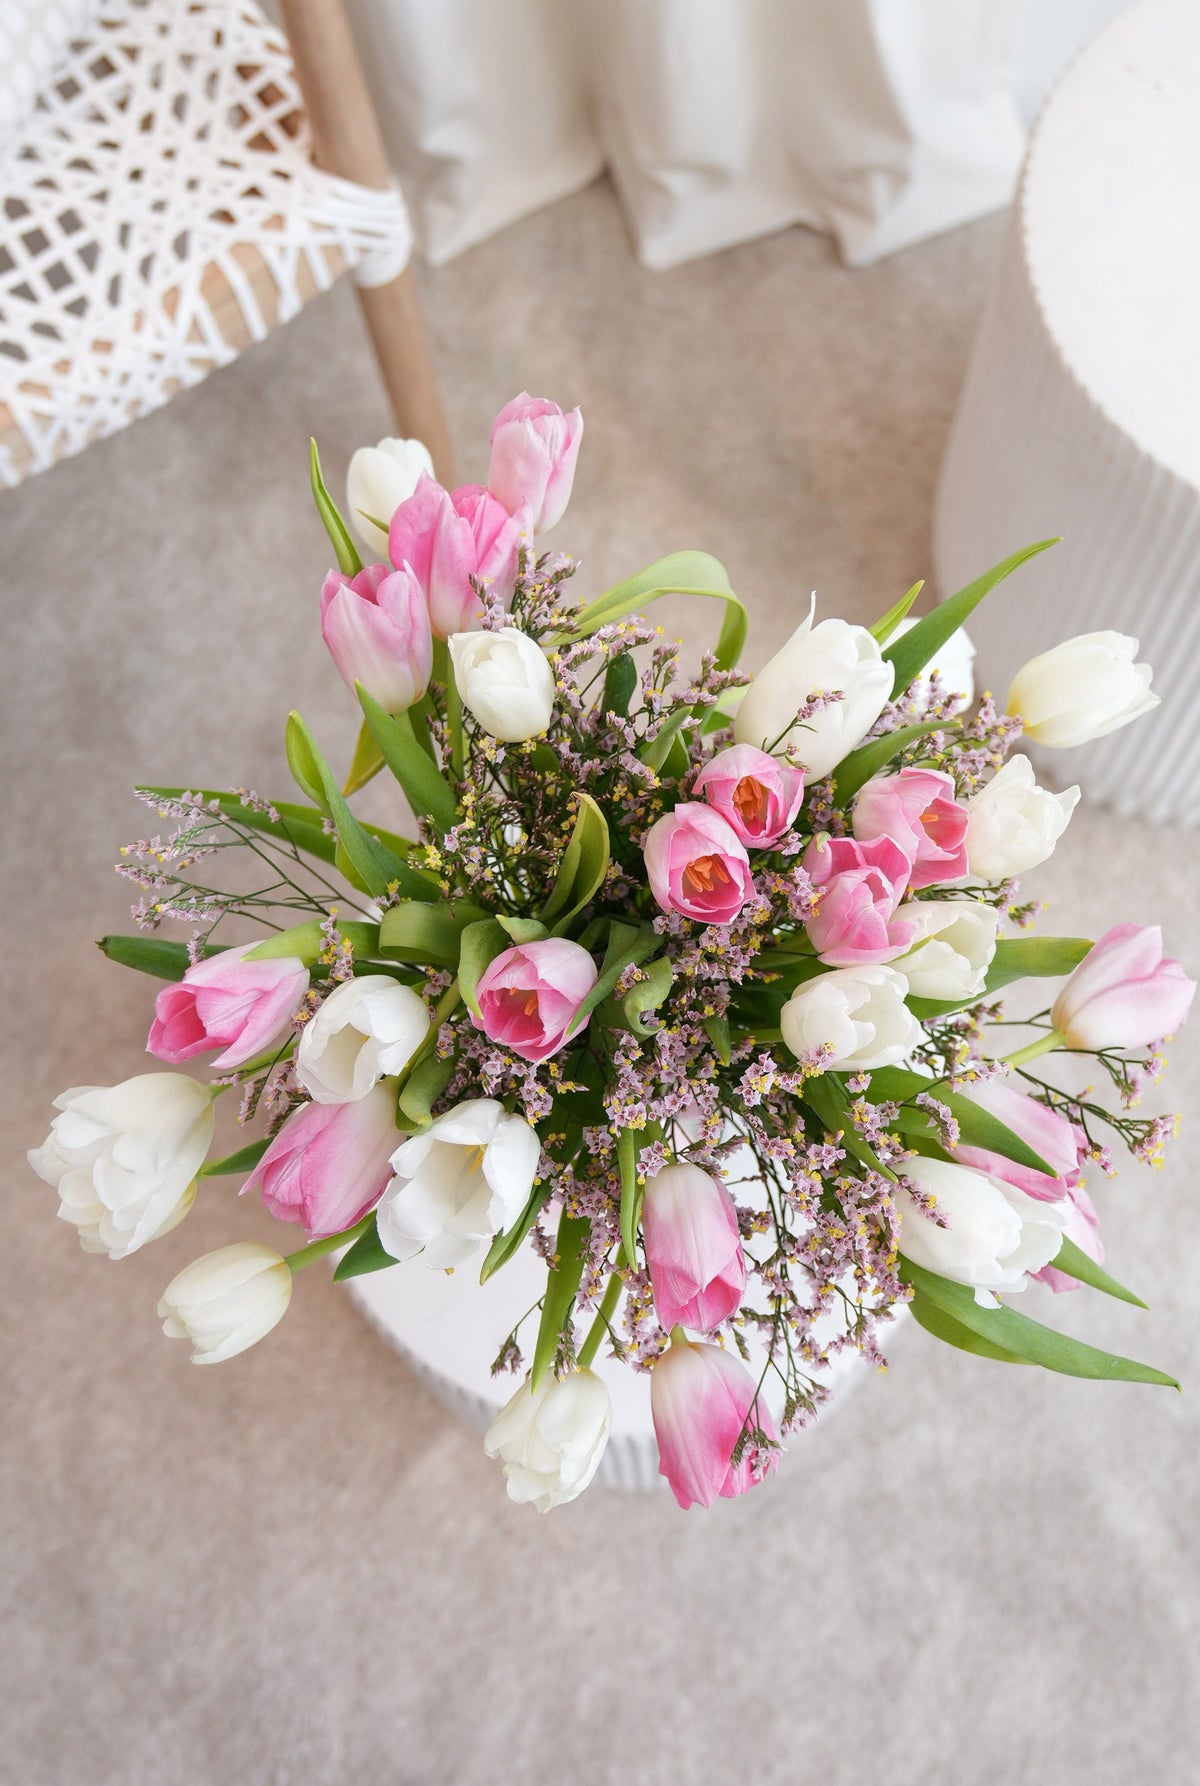 Birthday Pink and White Tulips - Vase